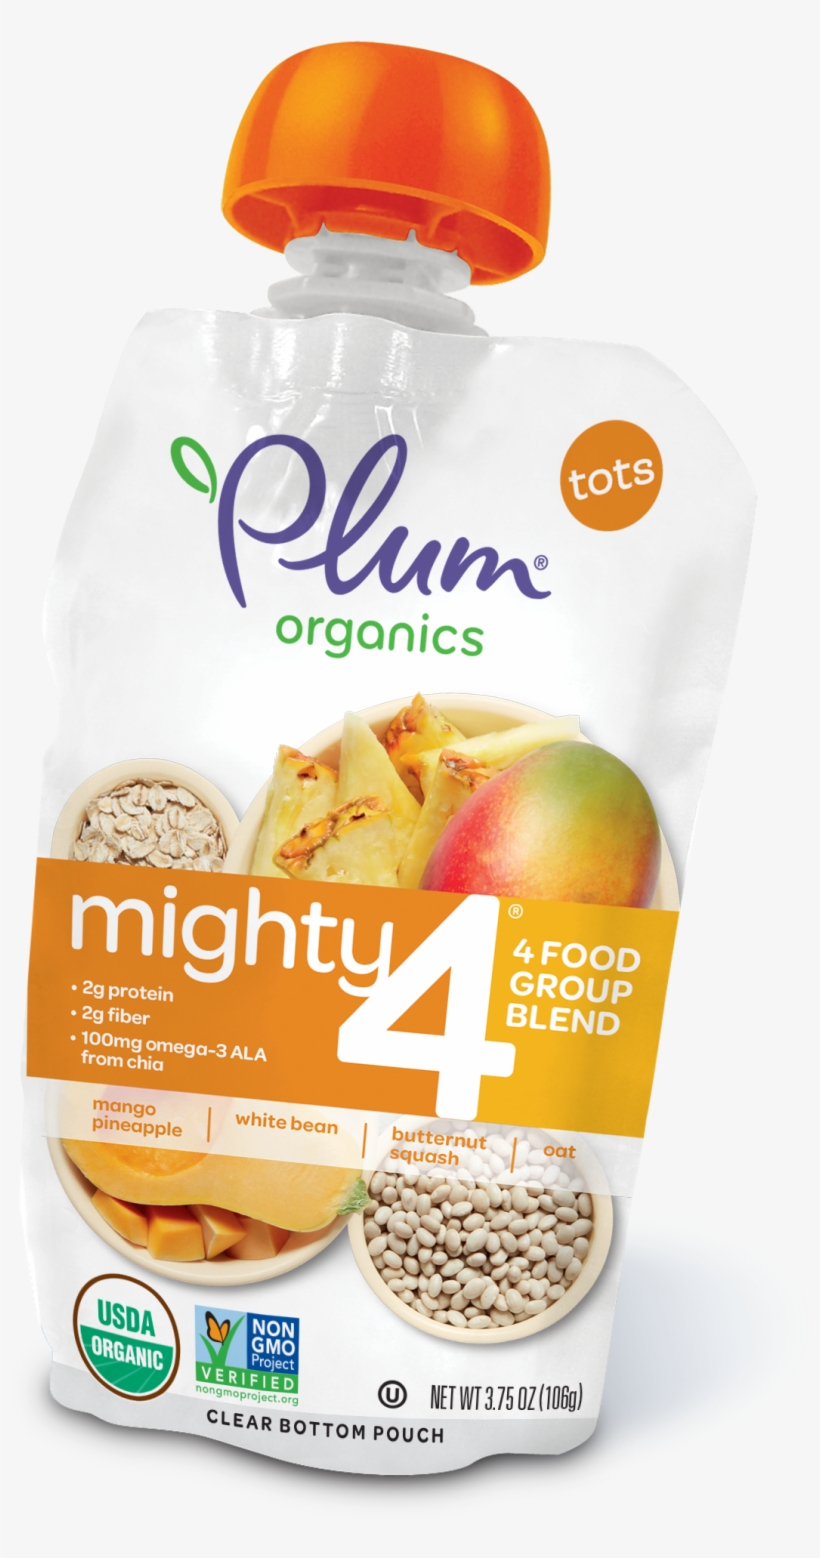 Mango & Pineapple, White Bean, Butternut Squash, Oat - Plum Organics, transparent png #2623917